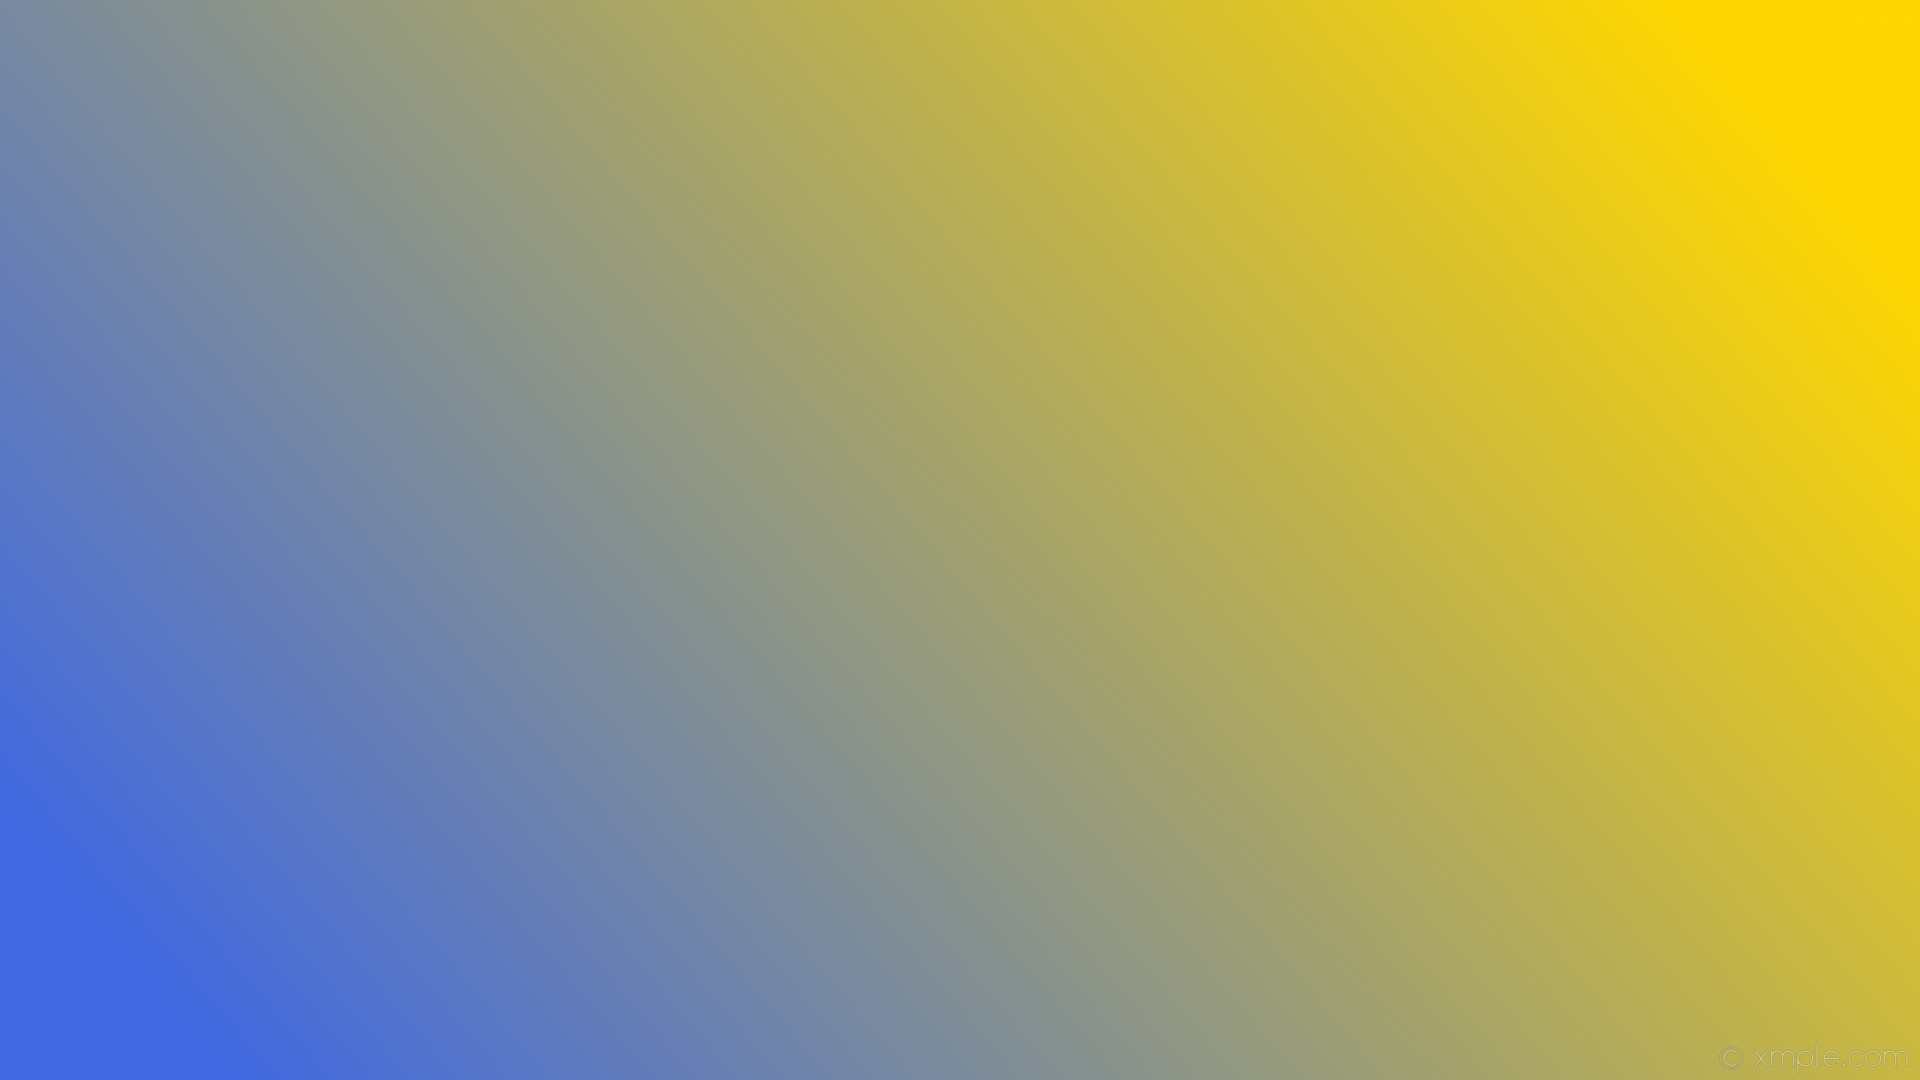 1920x1080 wallpaper linear yellow gradient blue royal blue gold #4169e1 #ffd700 195Â°